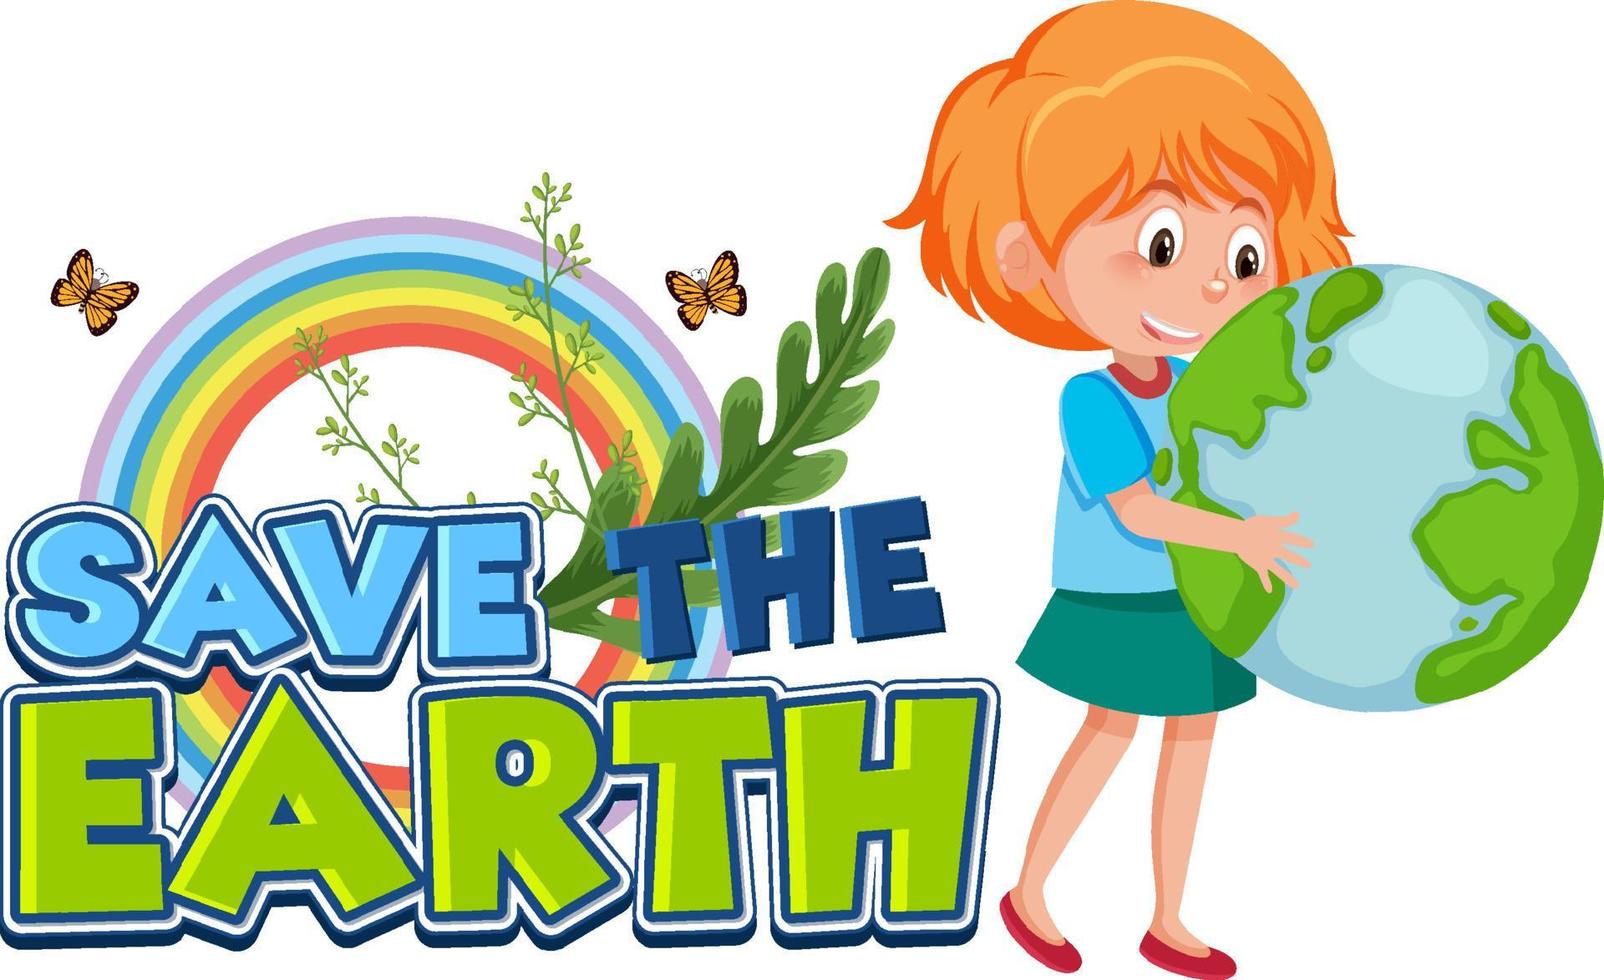 salve o banner da terra com duas garotas segurando o globo da terra vetor